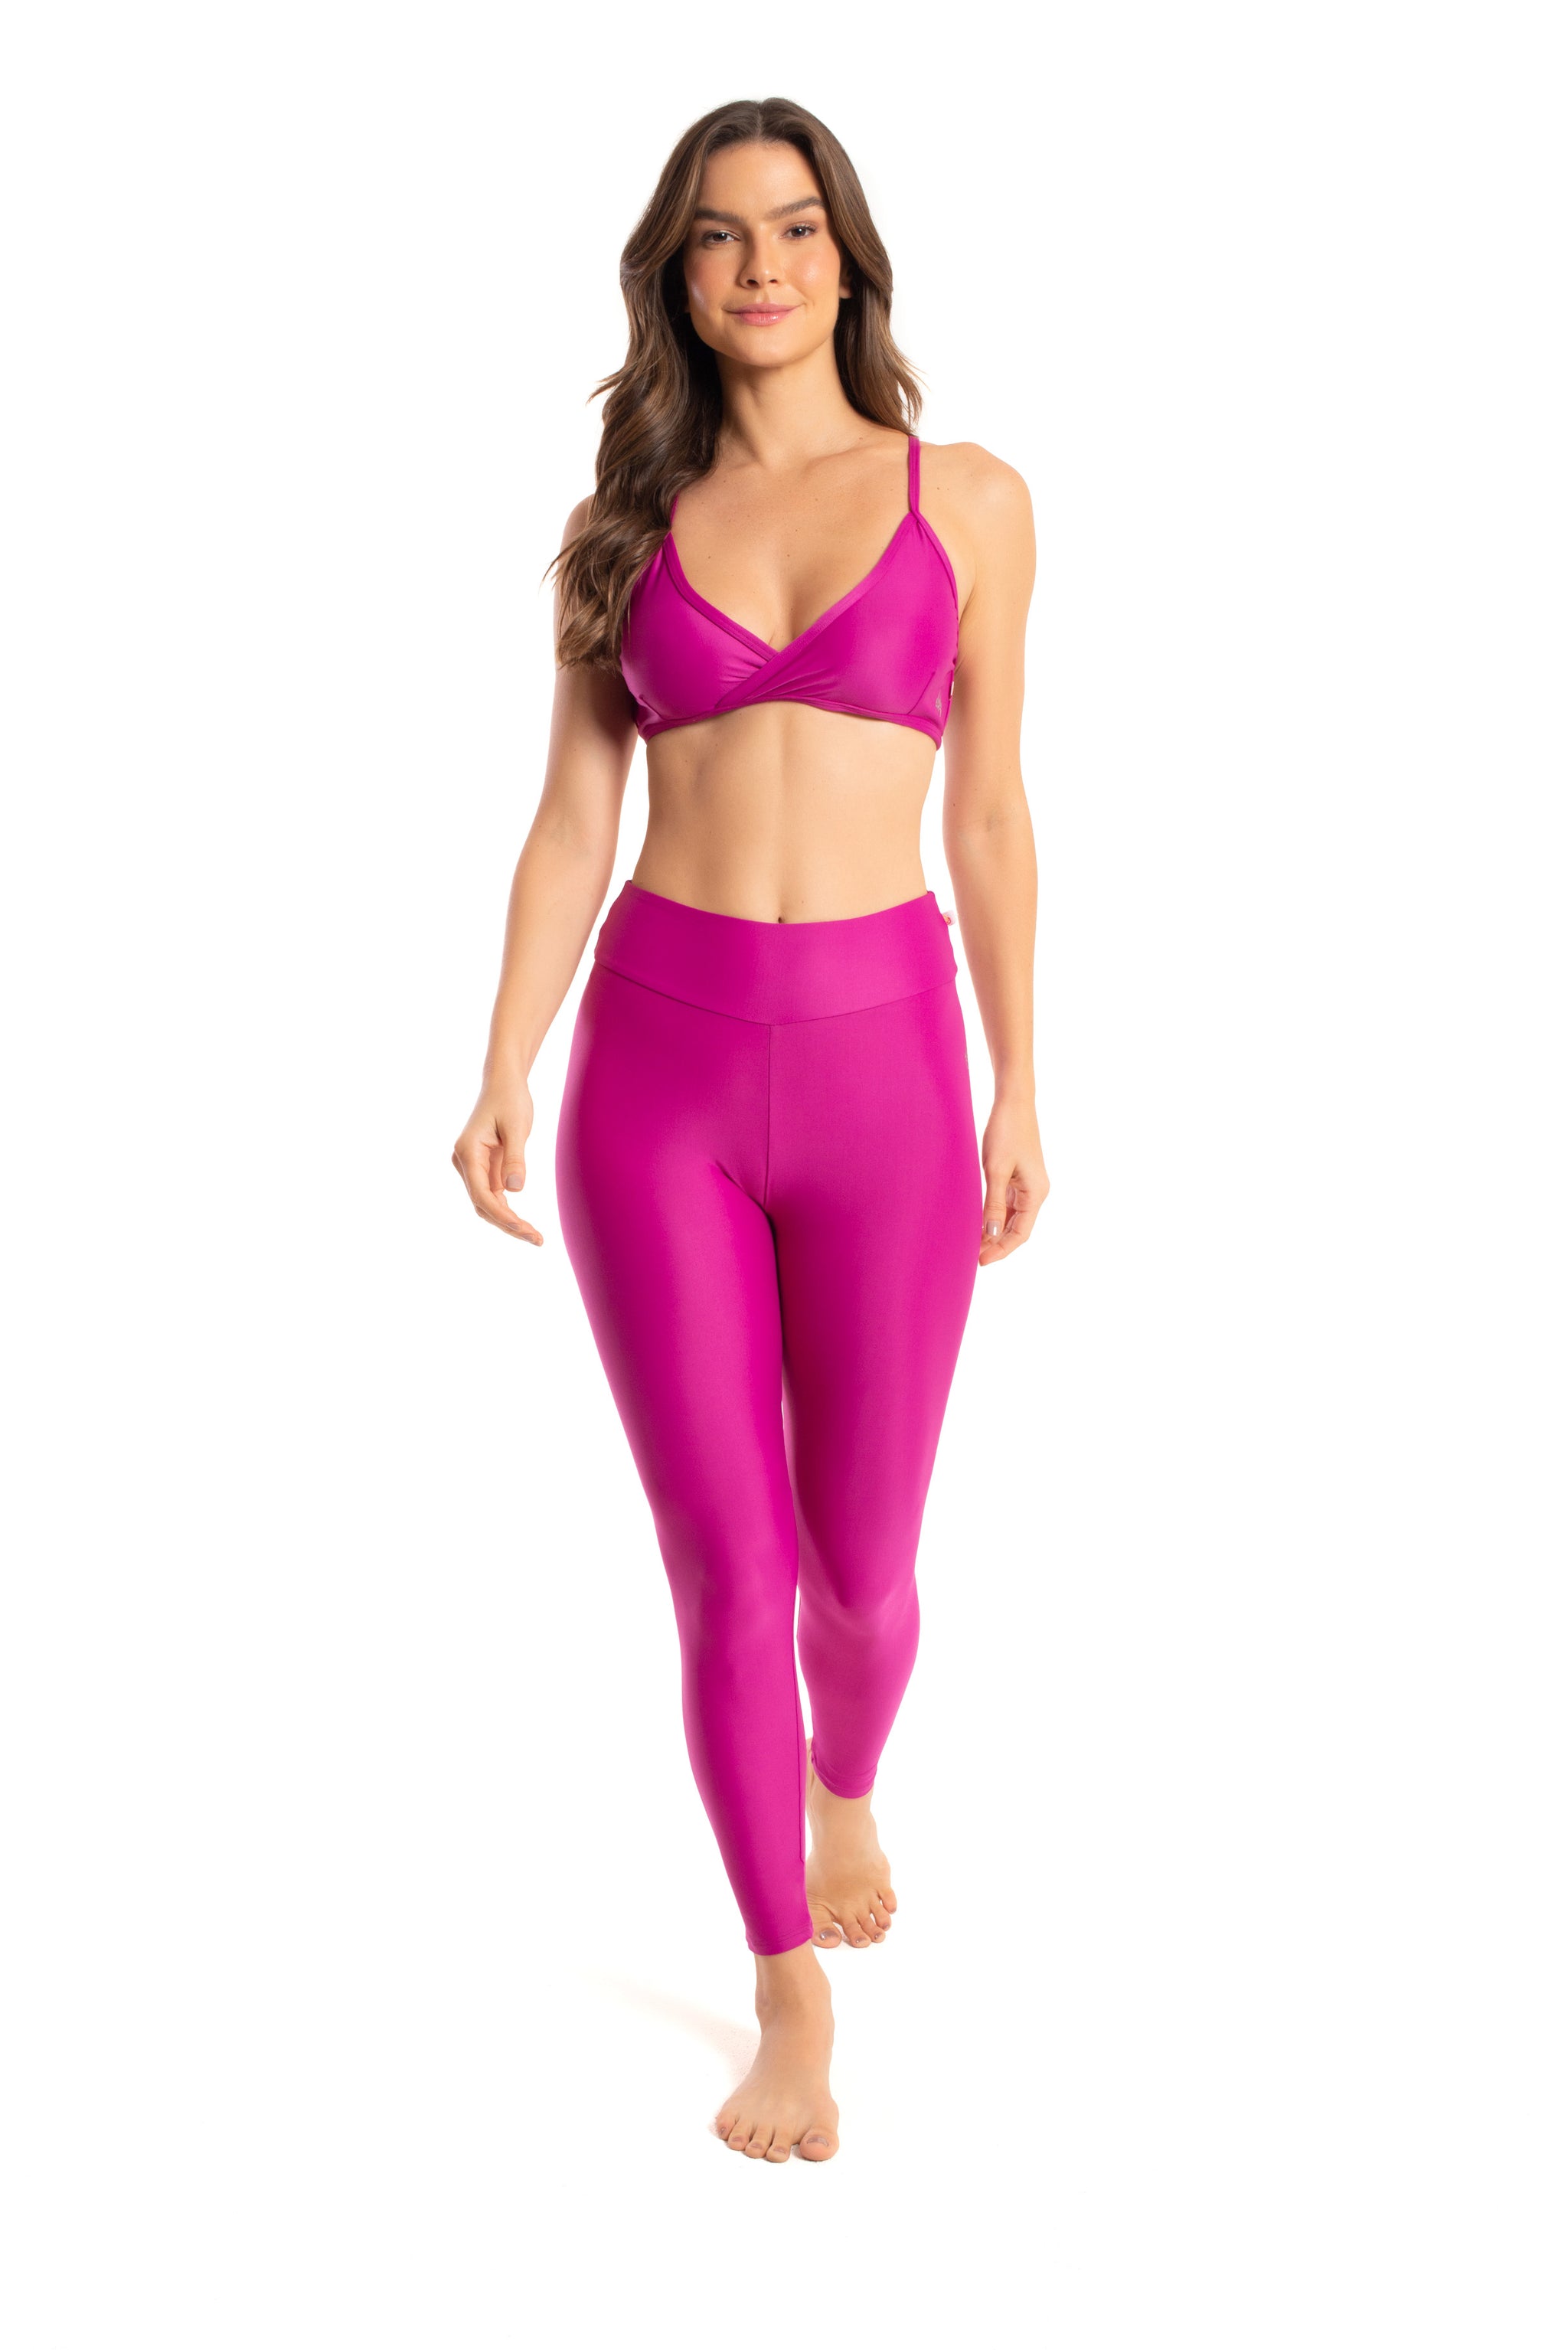 Chrome Hearts Pink Leggings - Athletic apparel